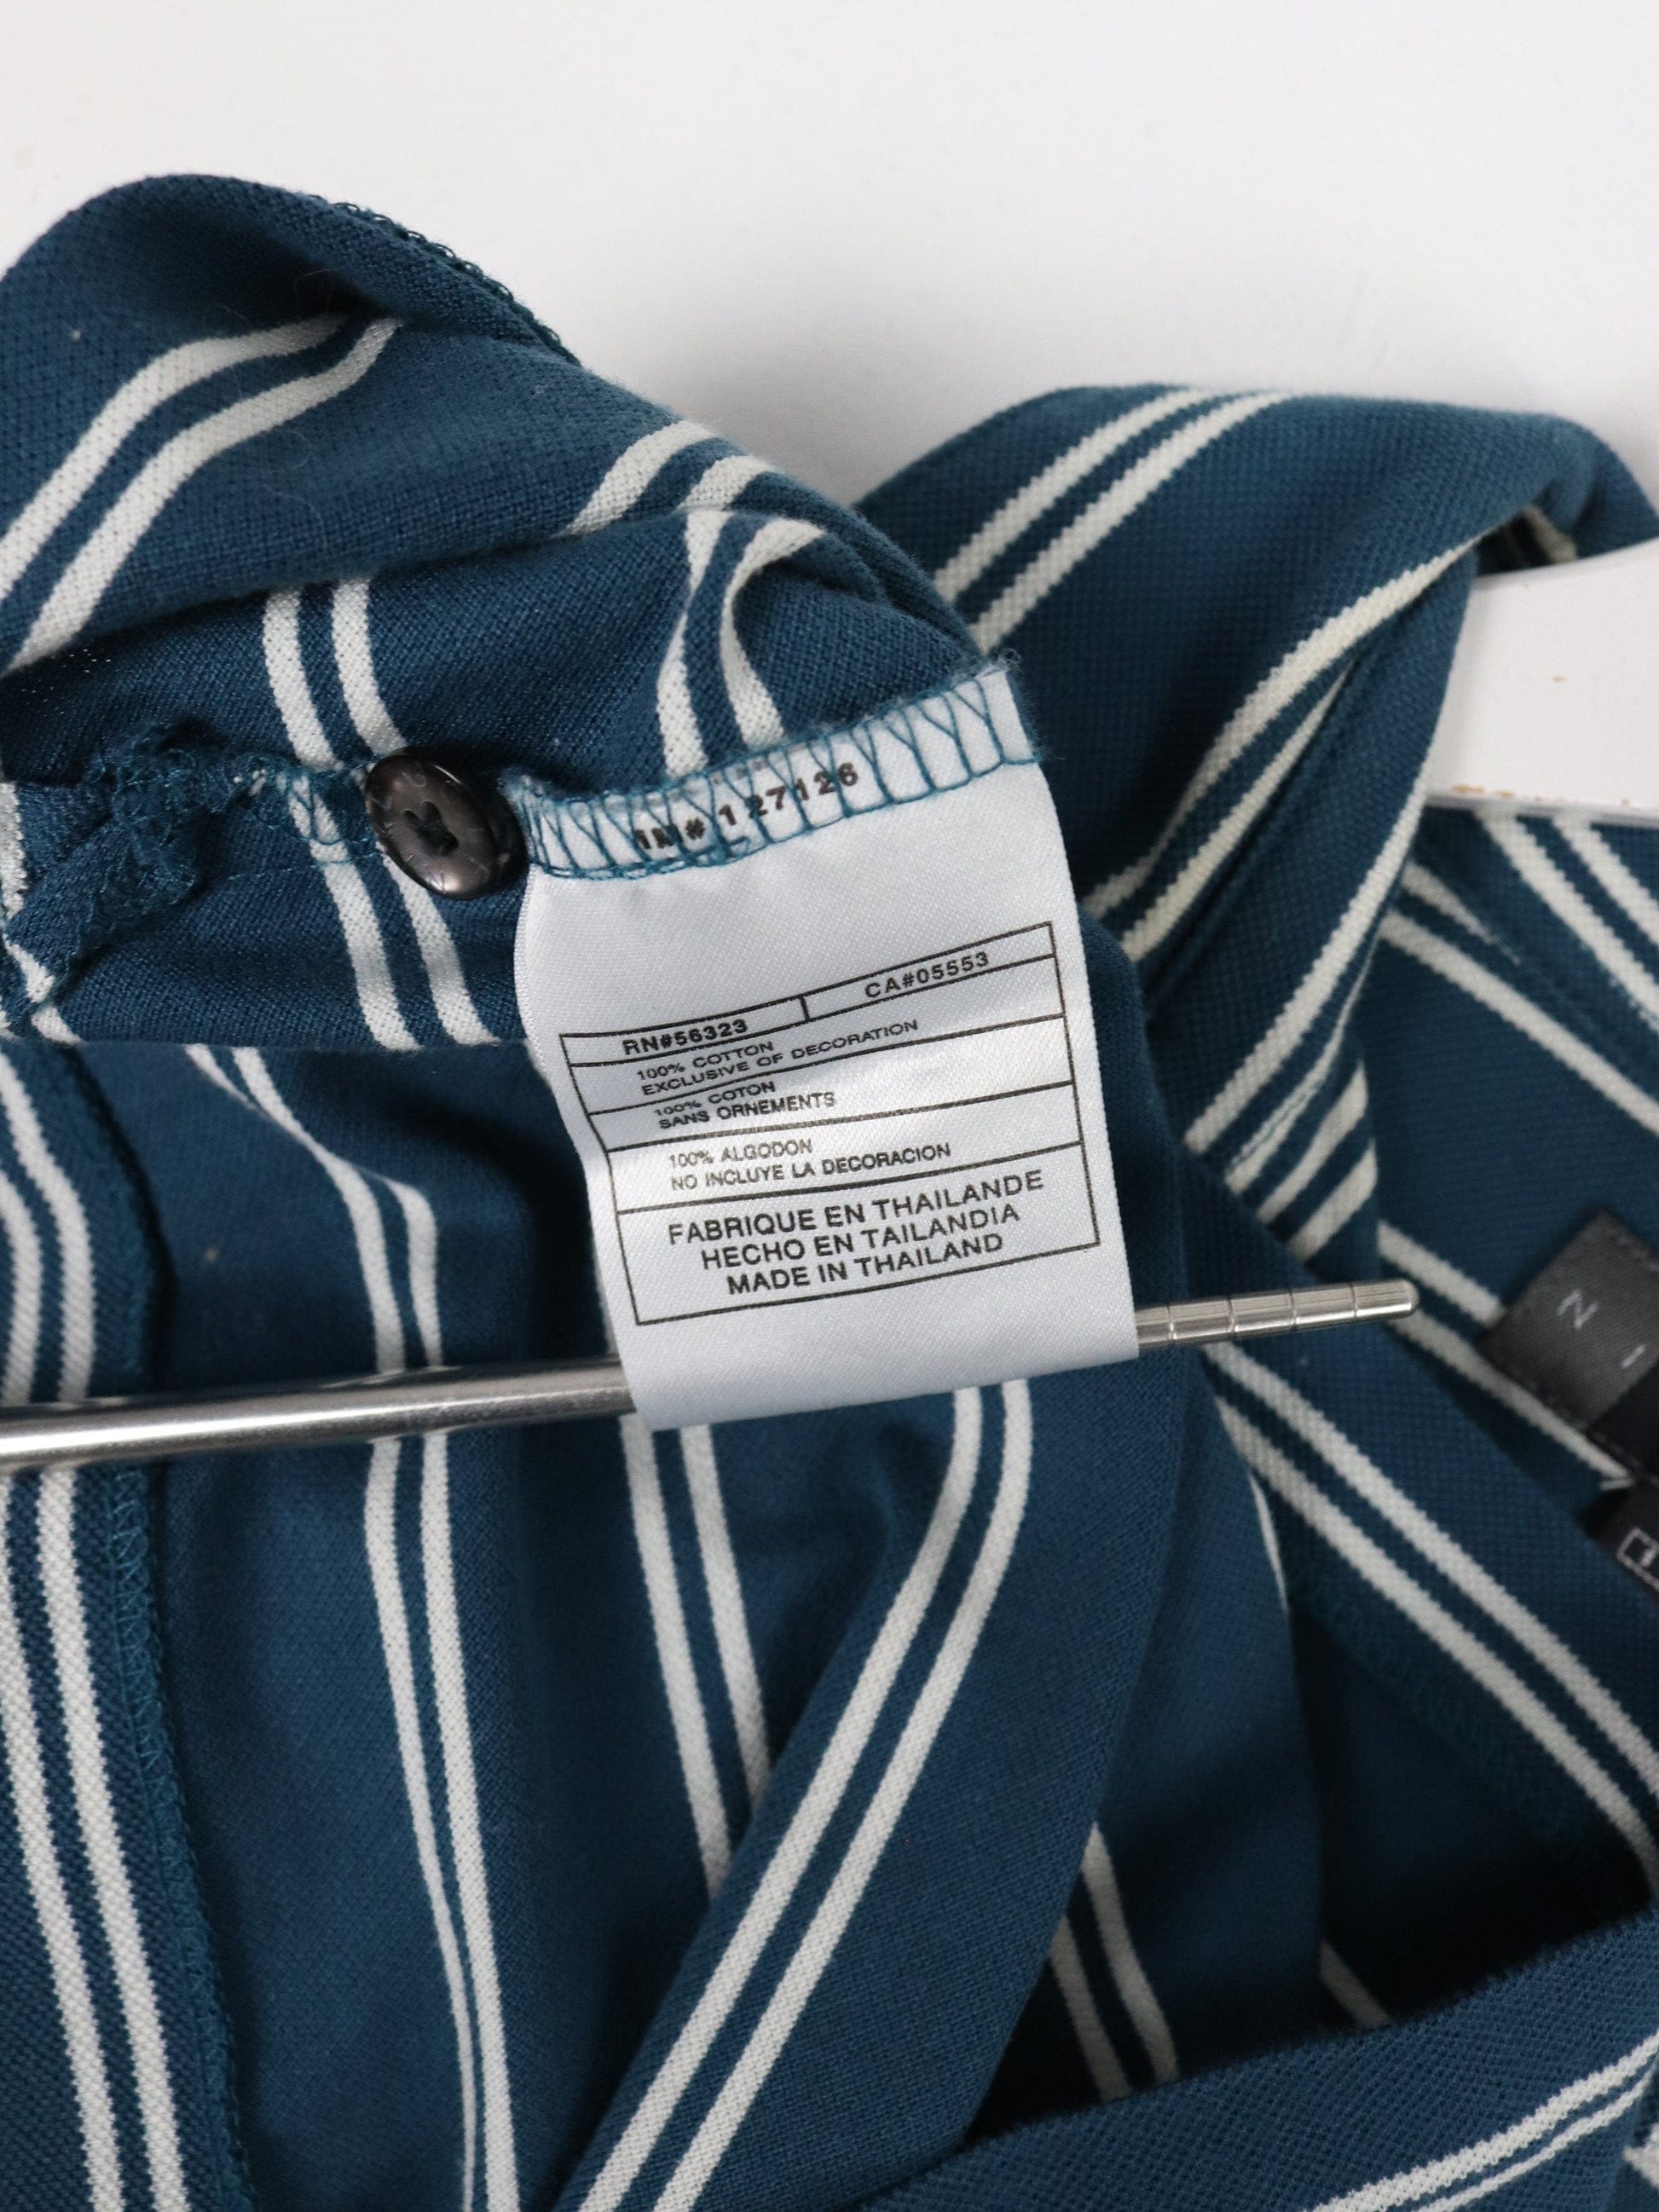 Nike Button Up Shirts Nike Golf Polo Shirt Mens Small Blue Striped